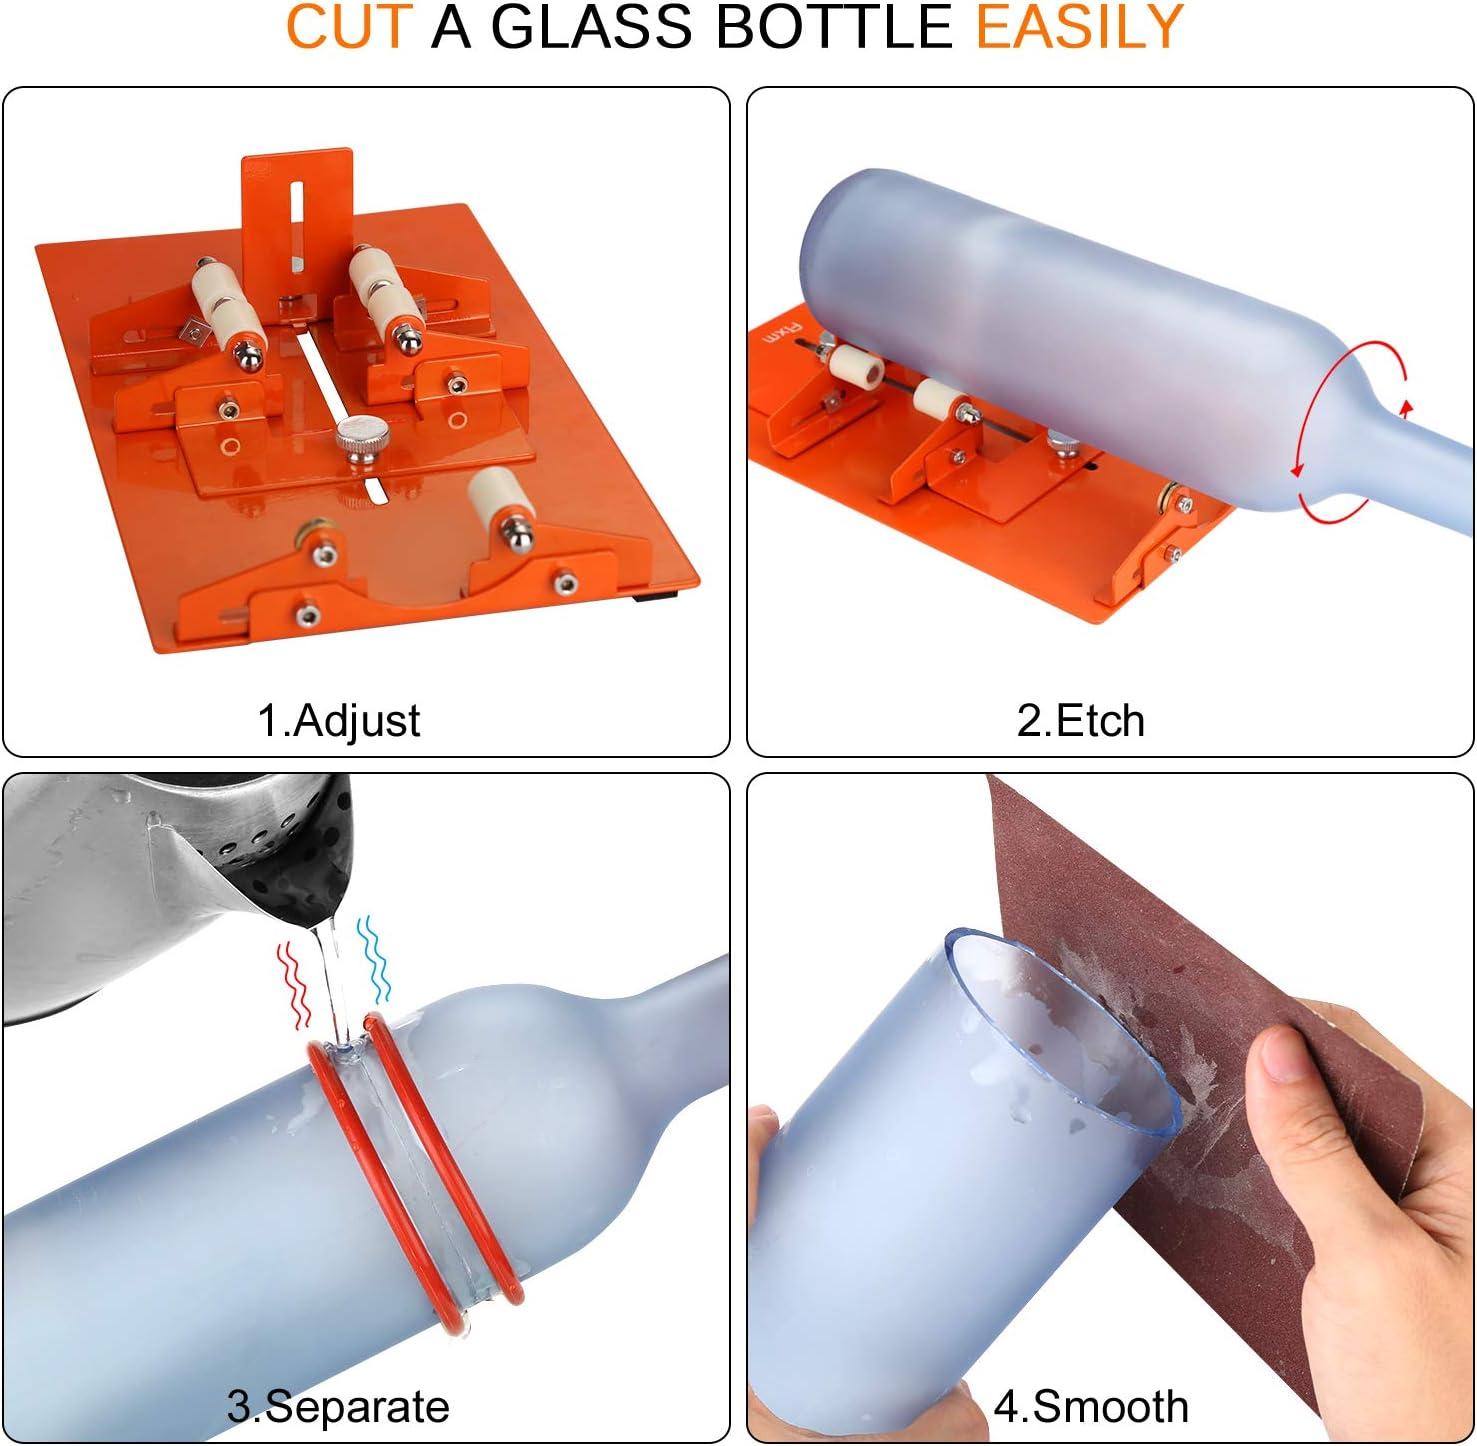 FIXM Glass Bottle Cutter Updated Version Bottle Cutting Machine